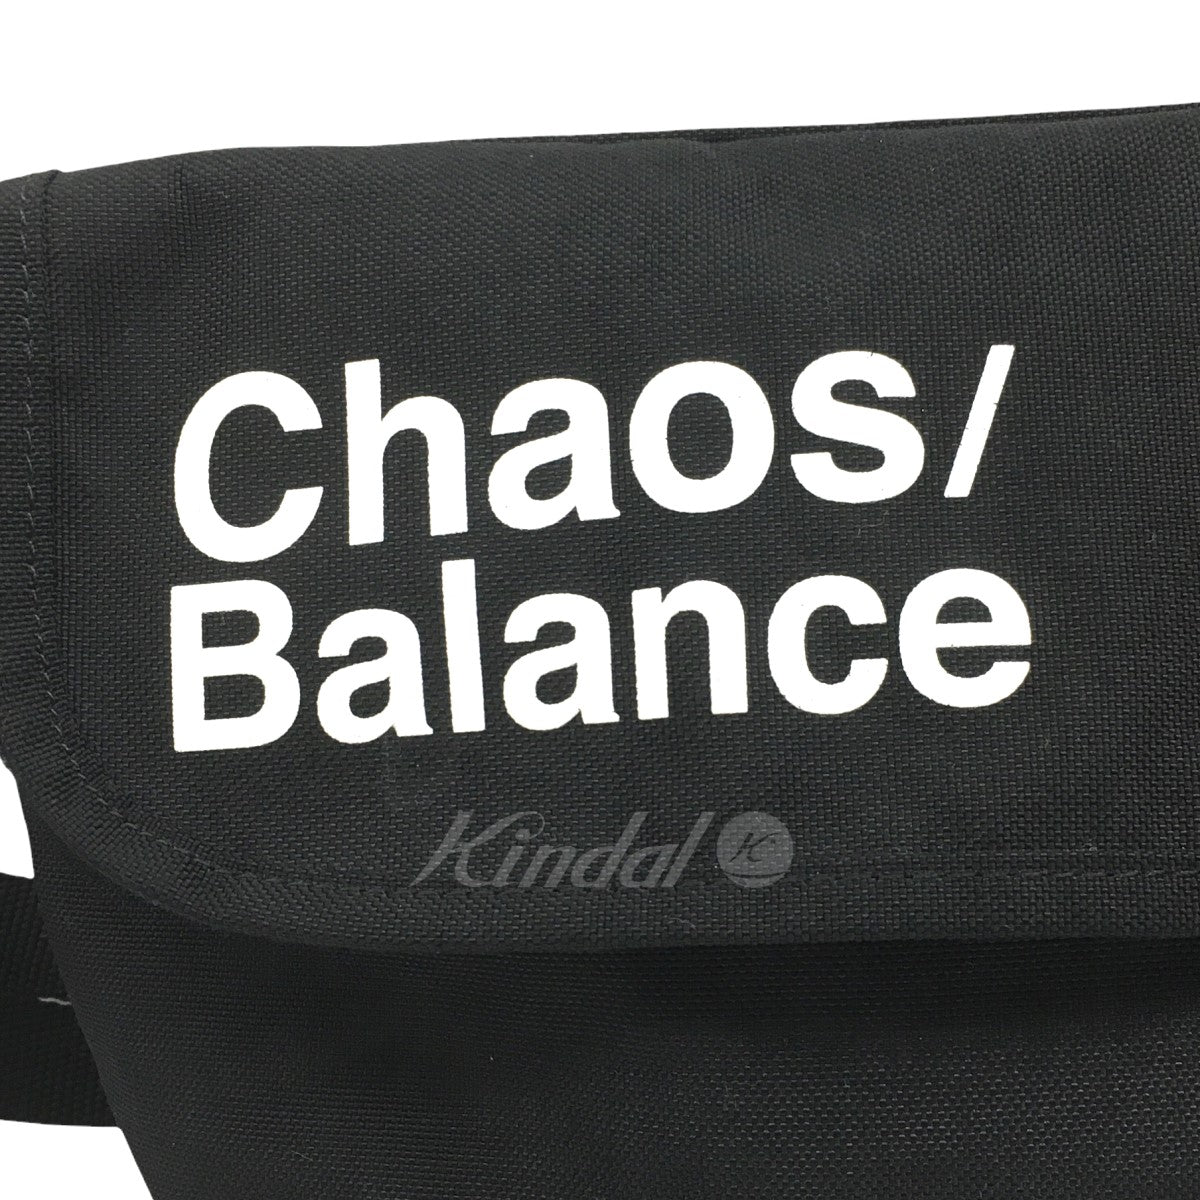 Chaos Balance カオス バランス ロゴ ショルダーバッグ